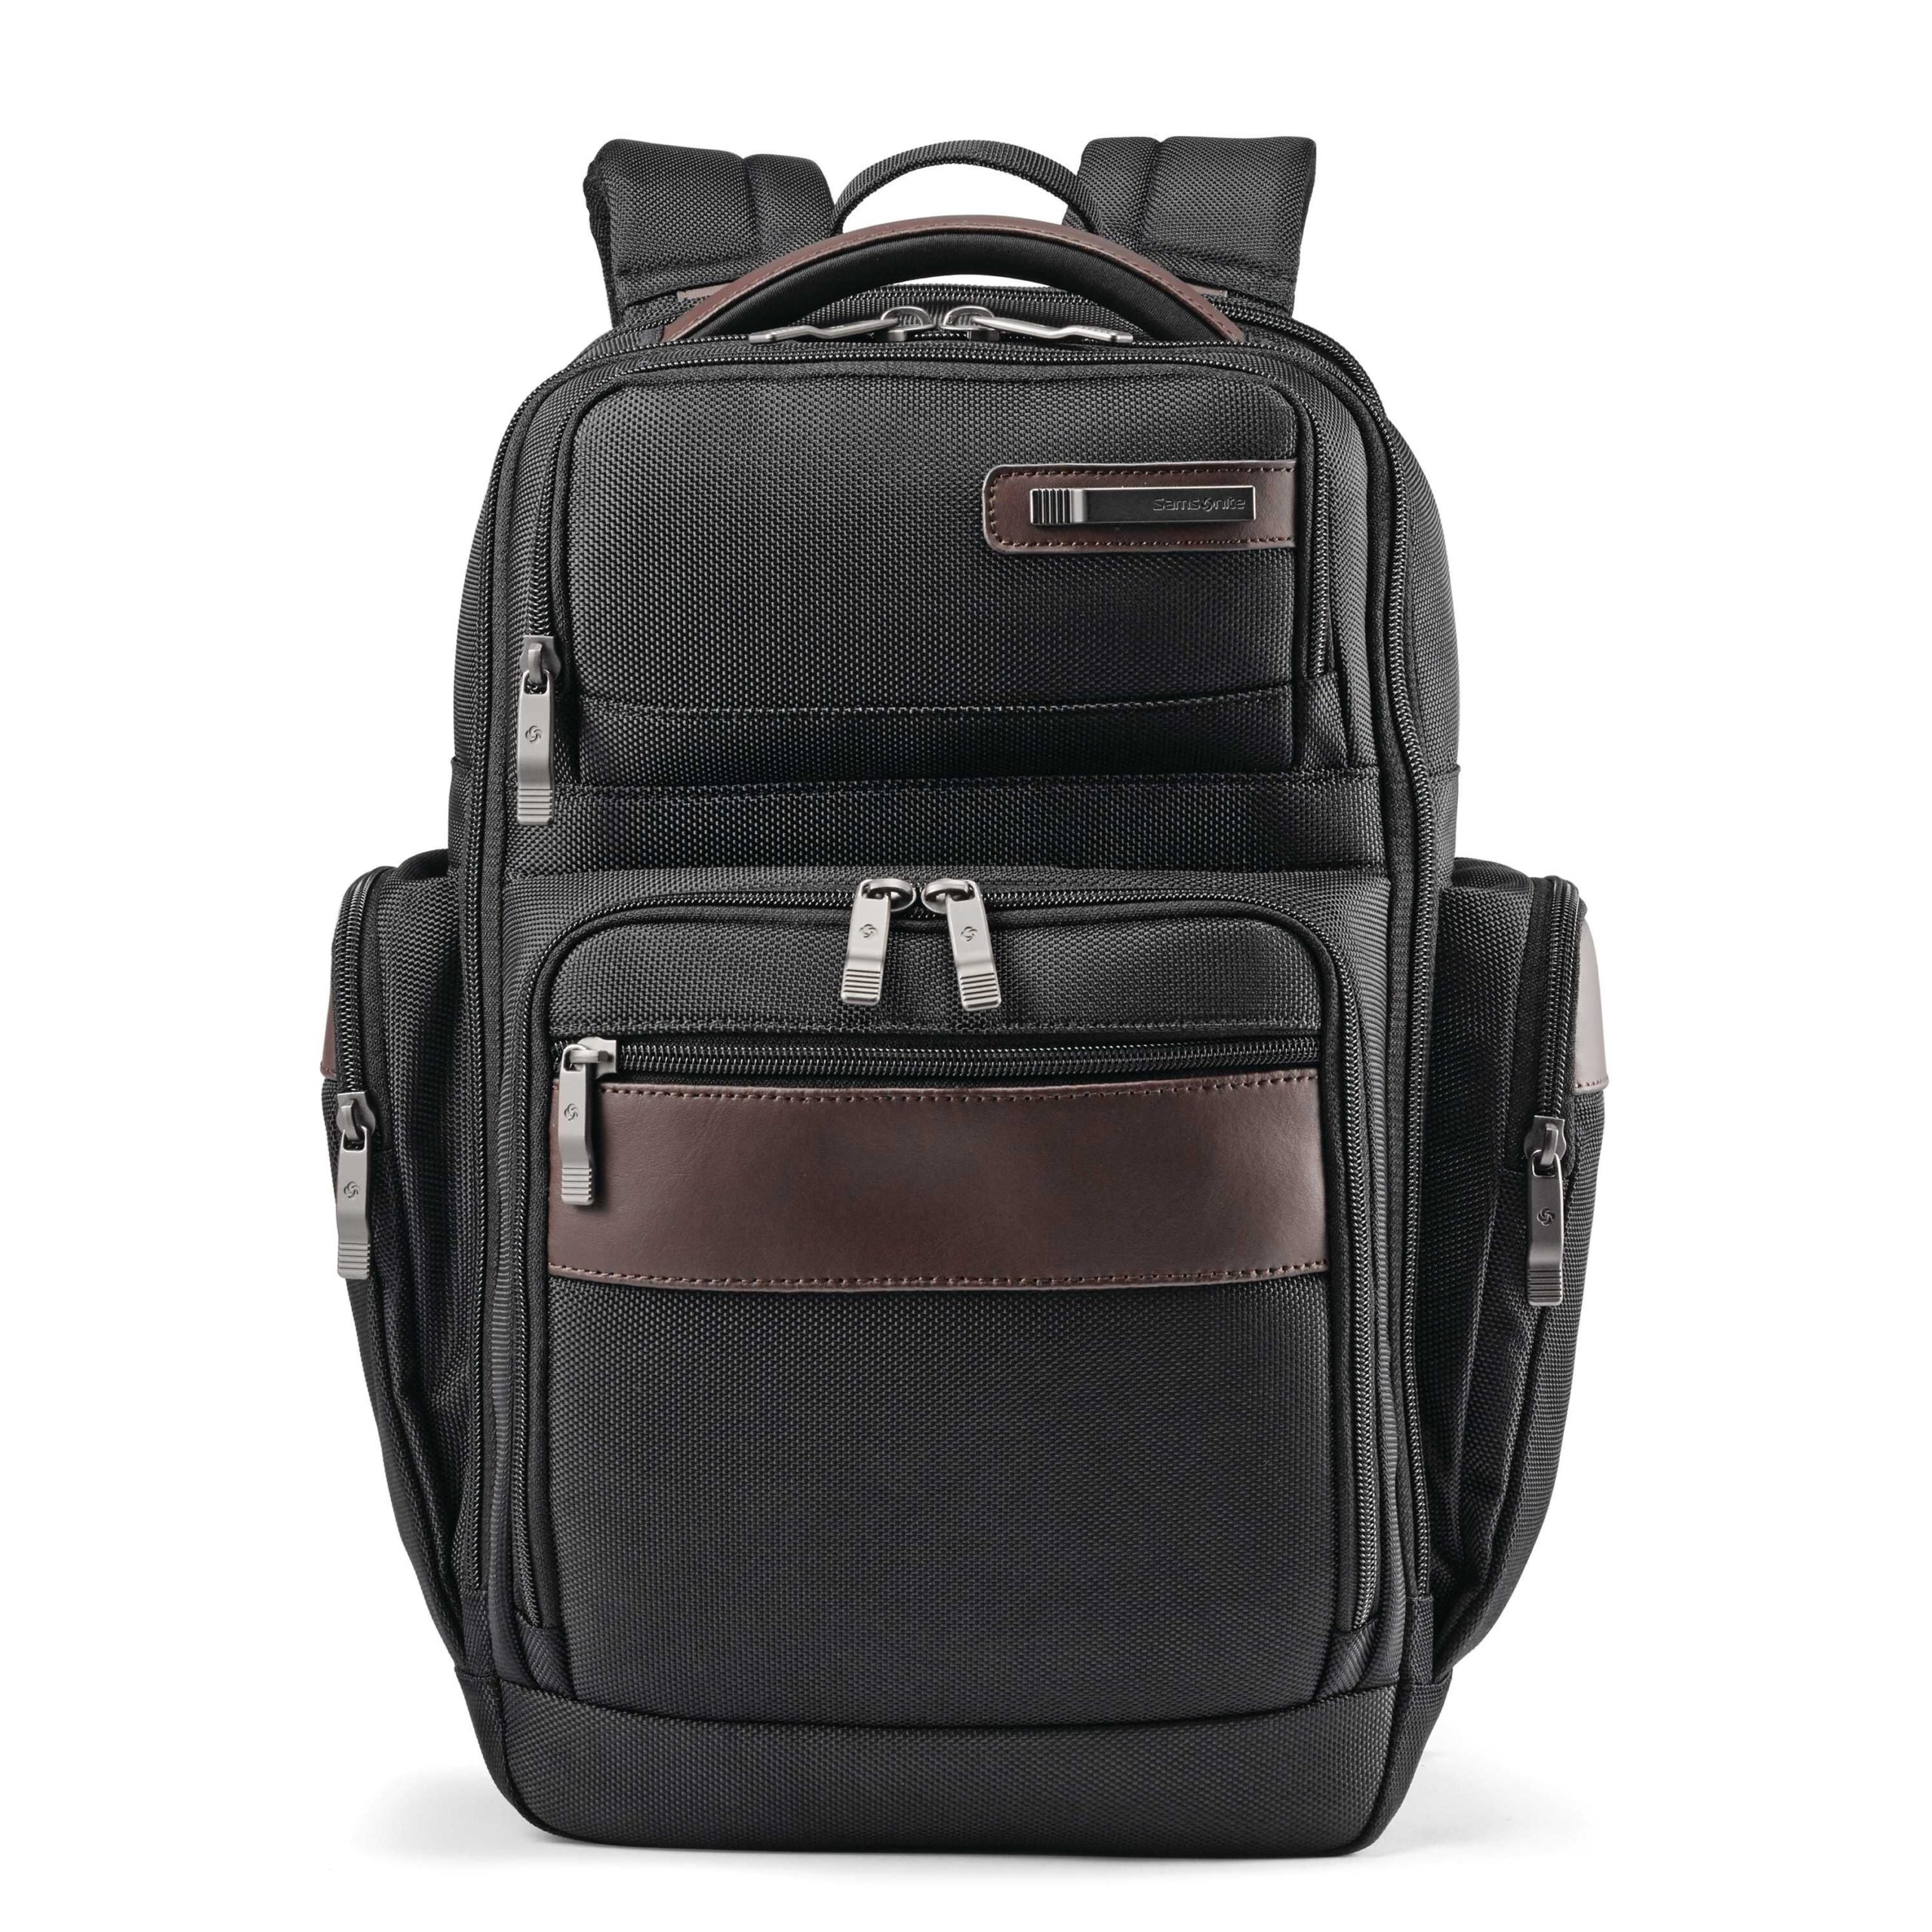 Buy Samsonite Luggage & Backpacks at Irv's Luggage